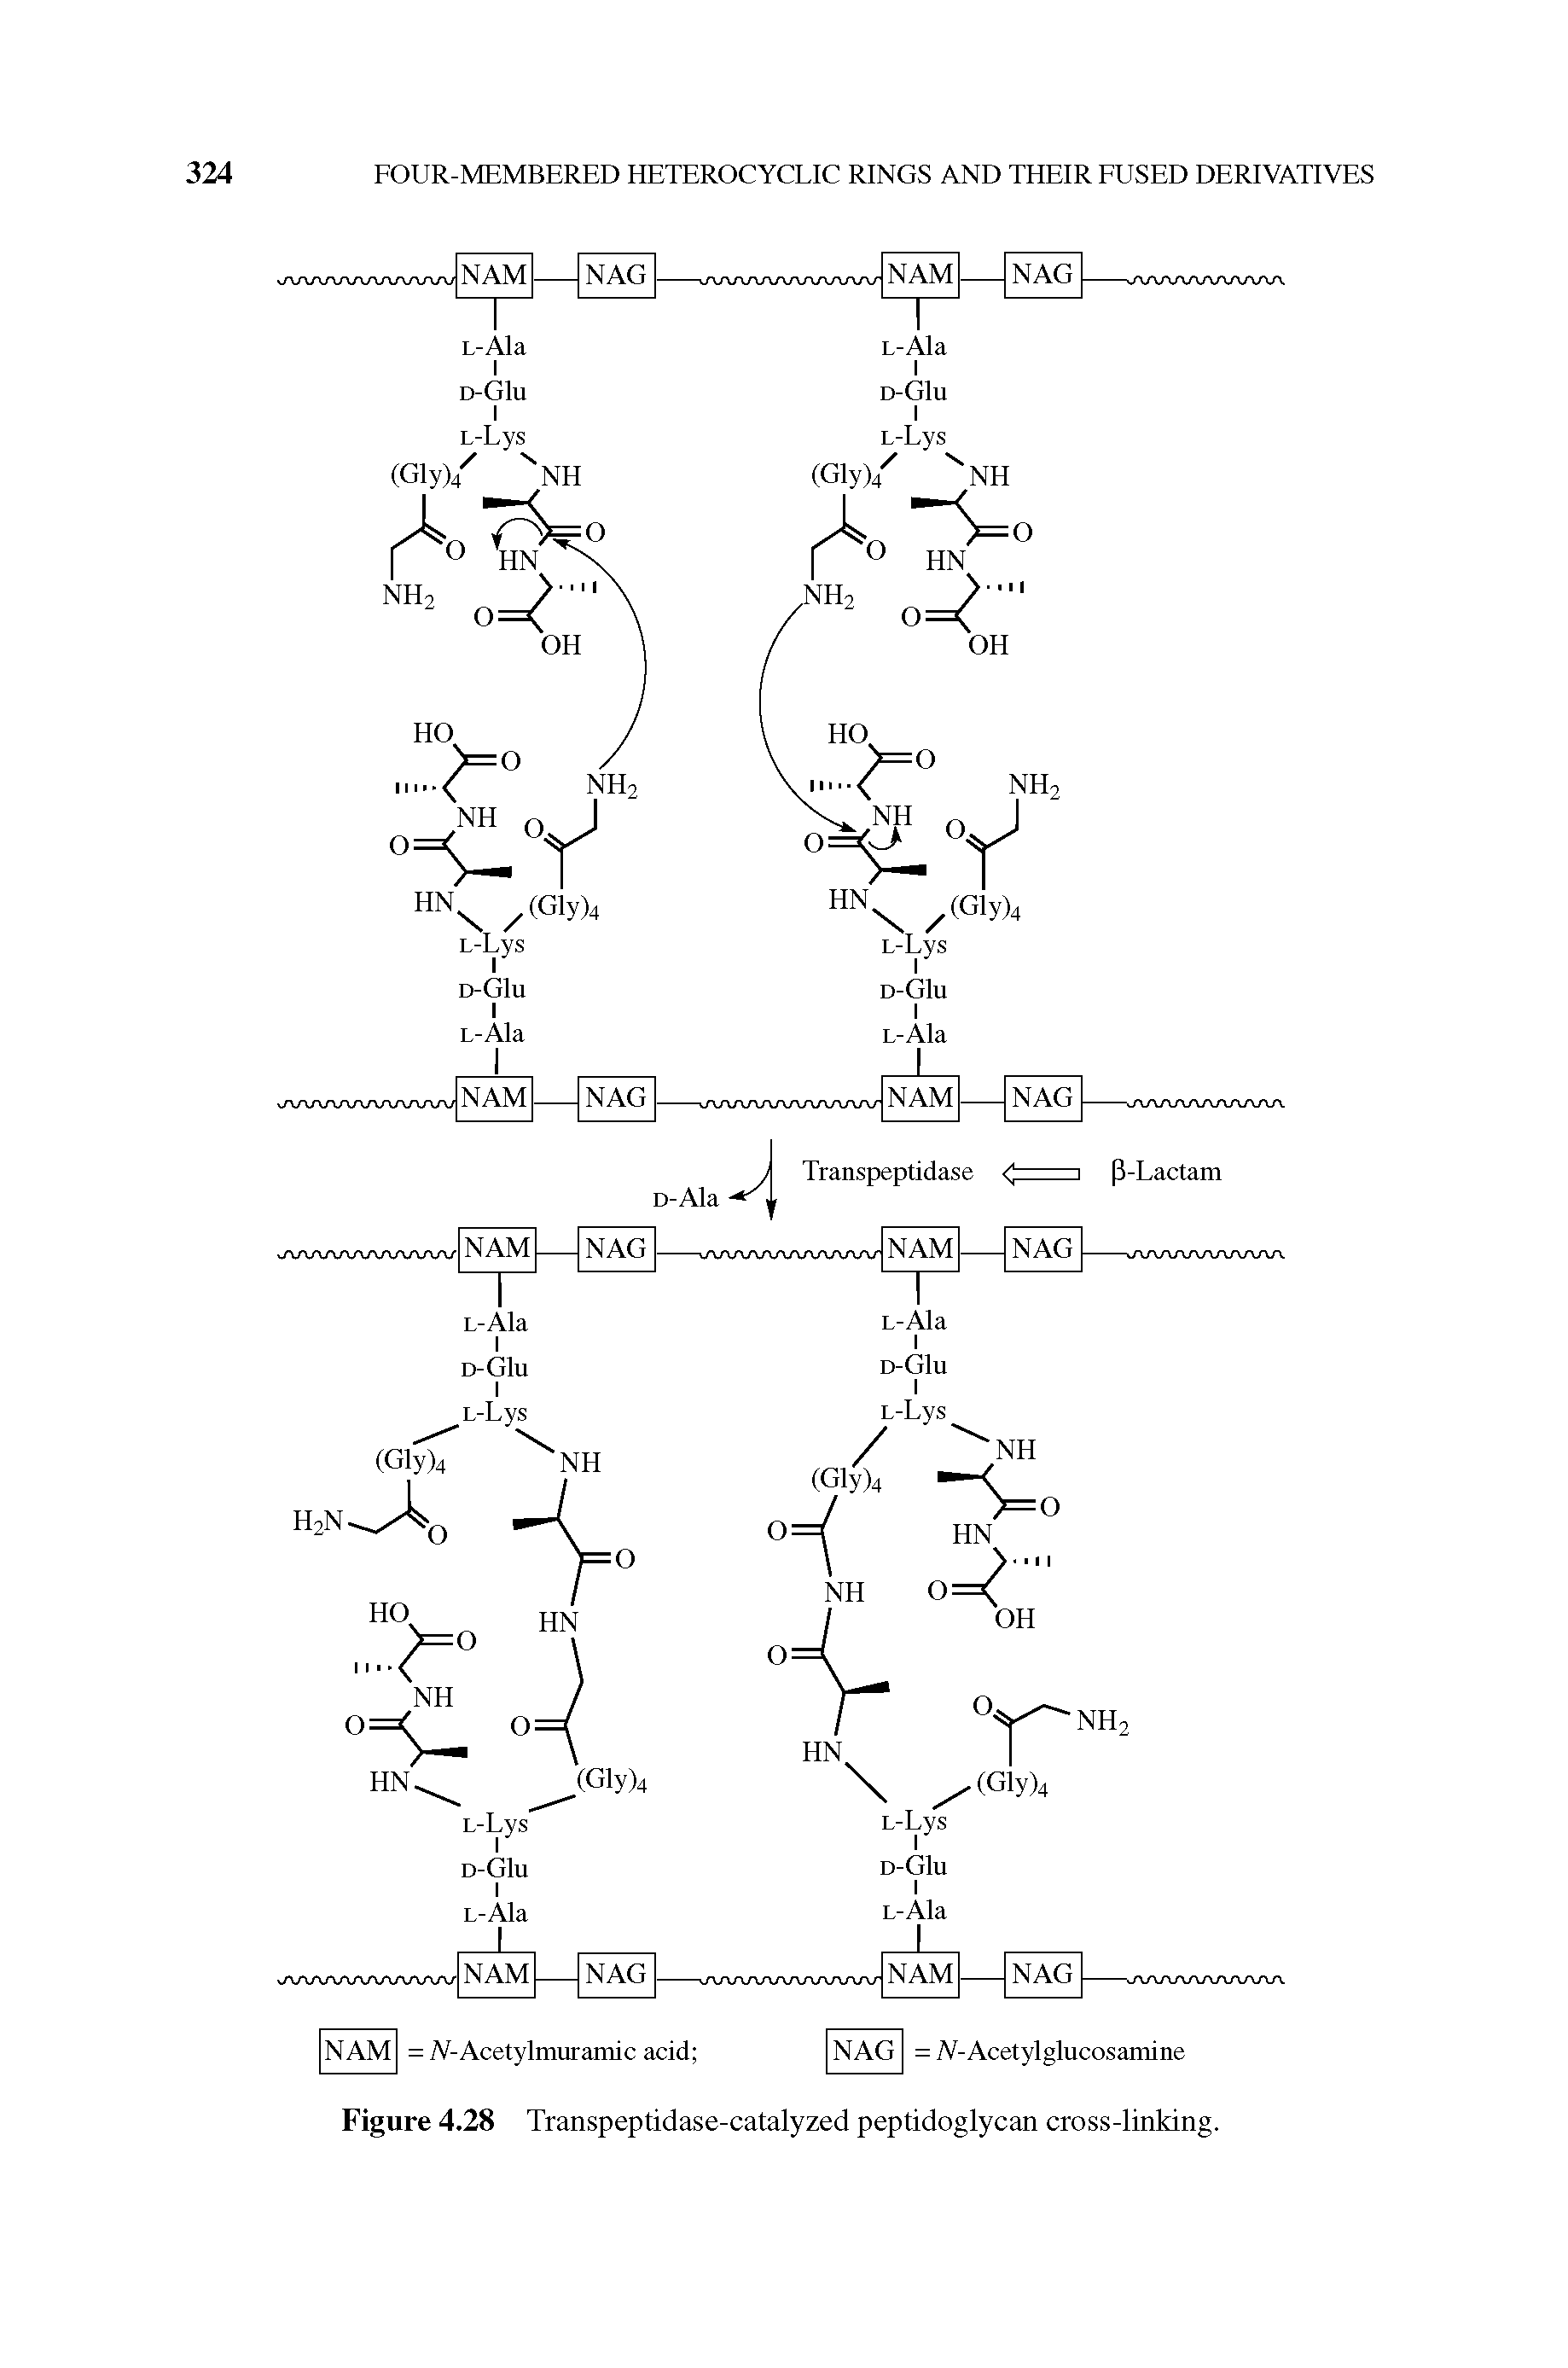 Figure 4.28 Transpeptidase-catalyzed peptidoglycan cross-linking.